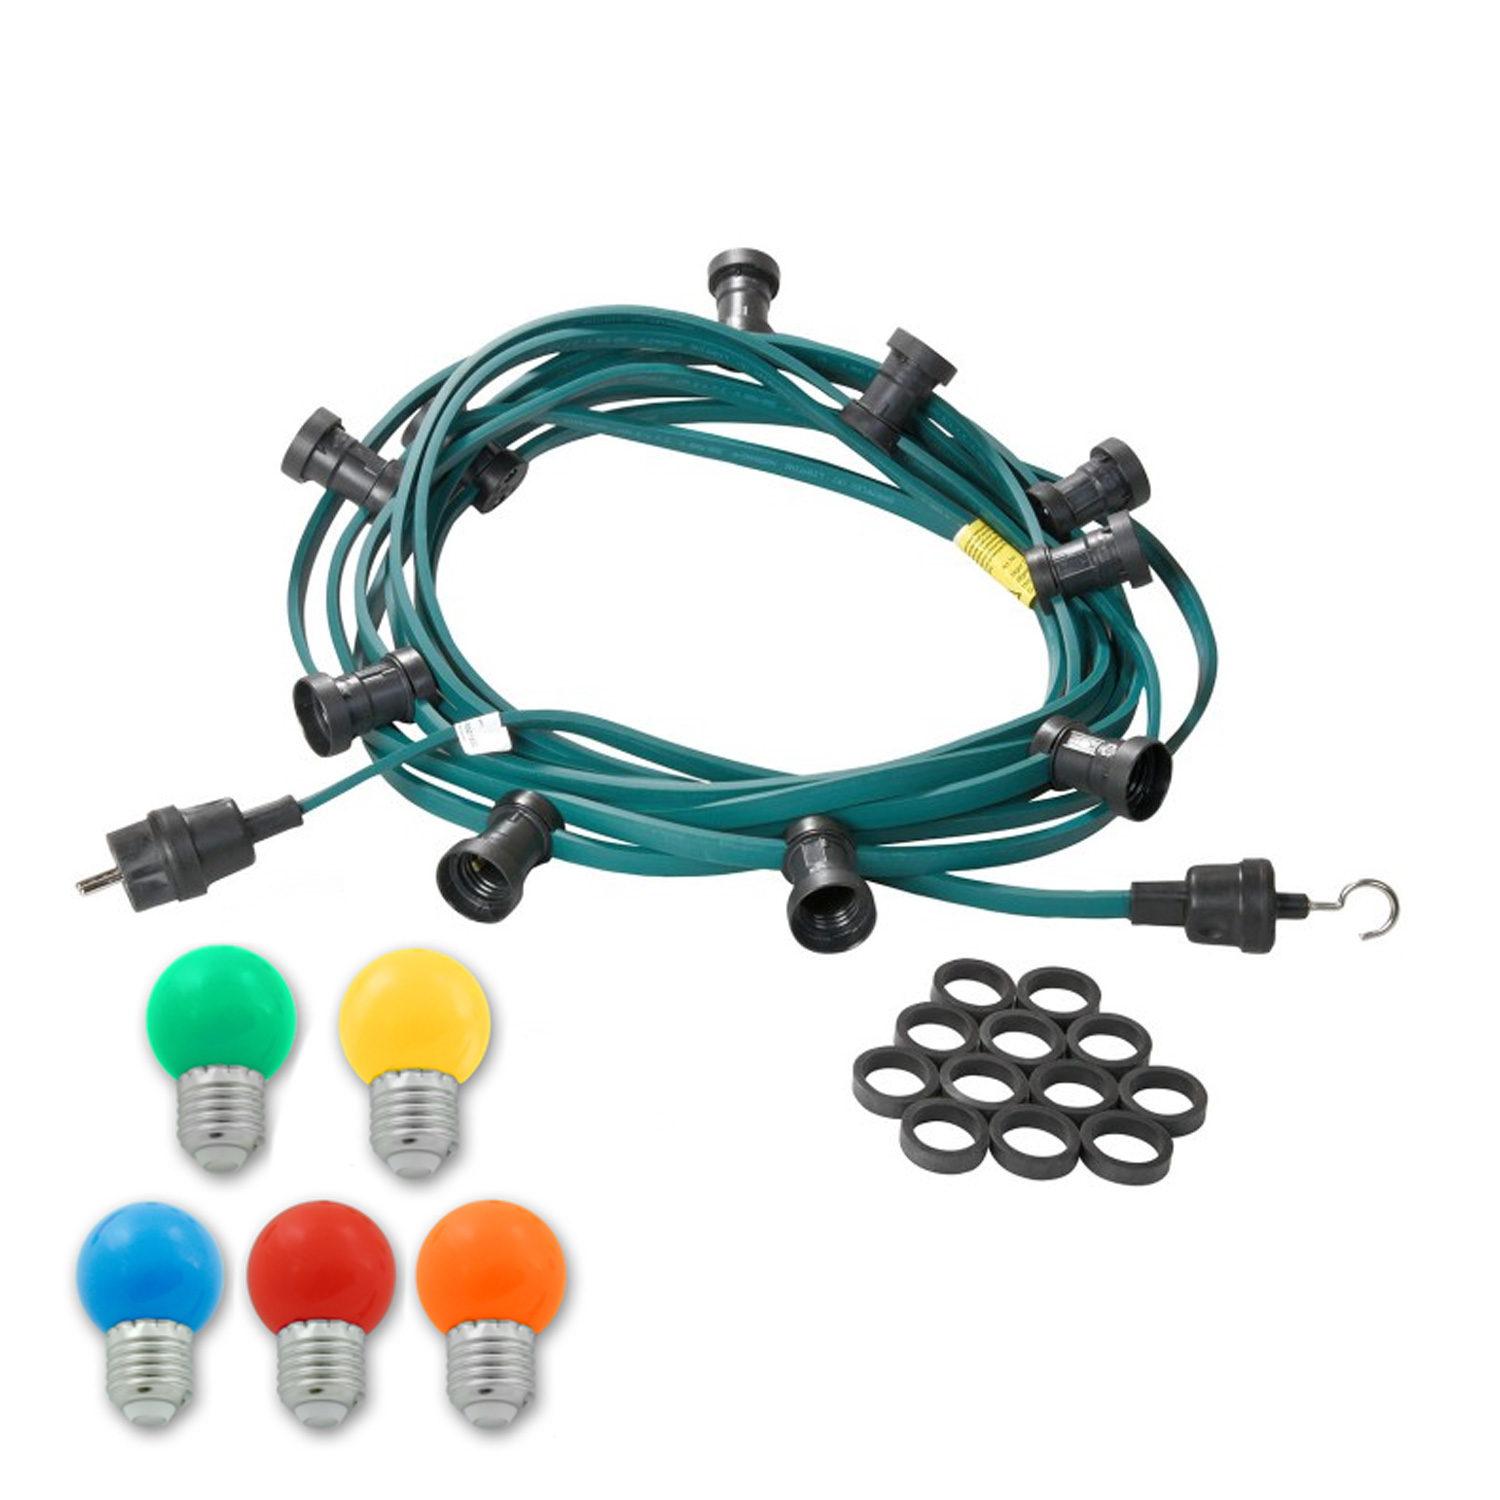 Illu-/Partylichterkette | E27-Fassungen | Made in Germany | mit farbigen, matten LED-Lampen | 5m | 5x E27-Fassungen